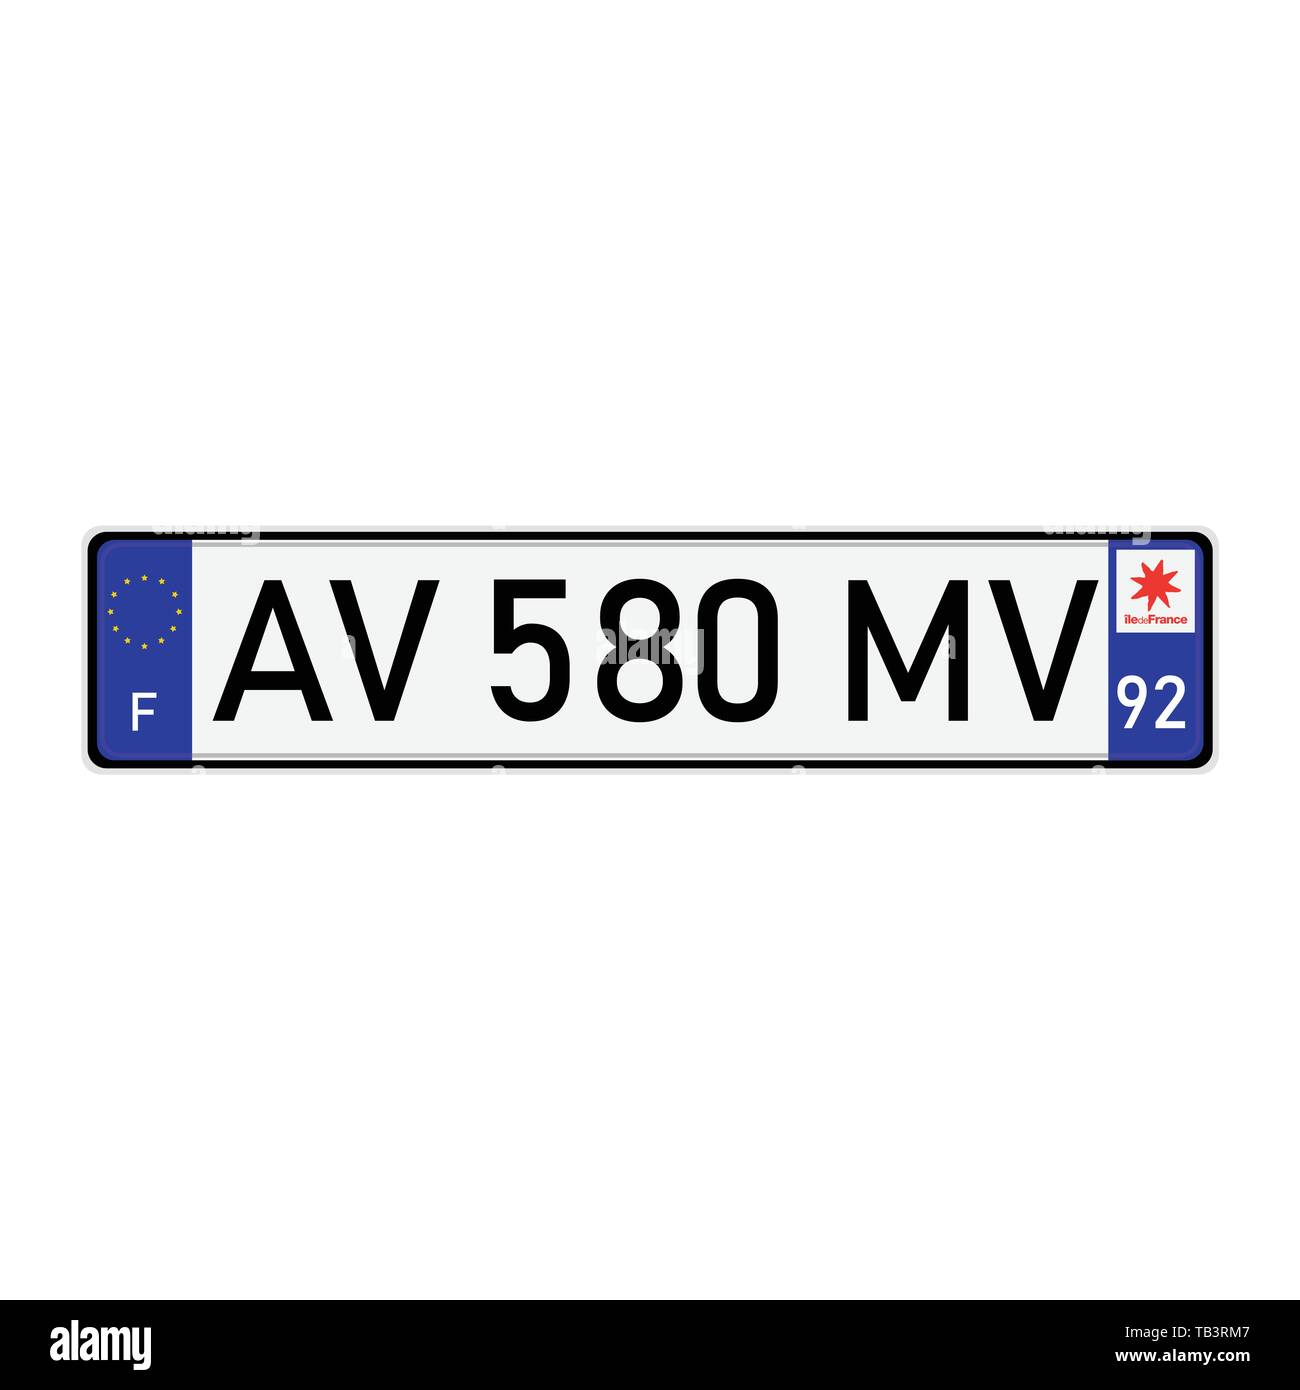 France european union car license plate registration number Stock Vector